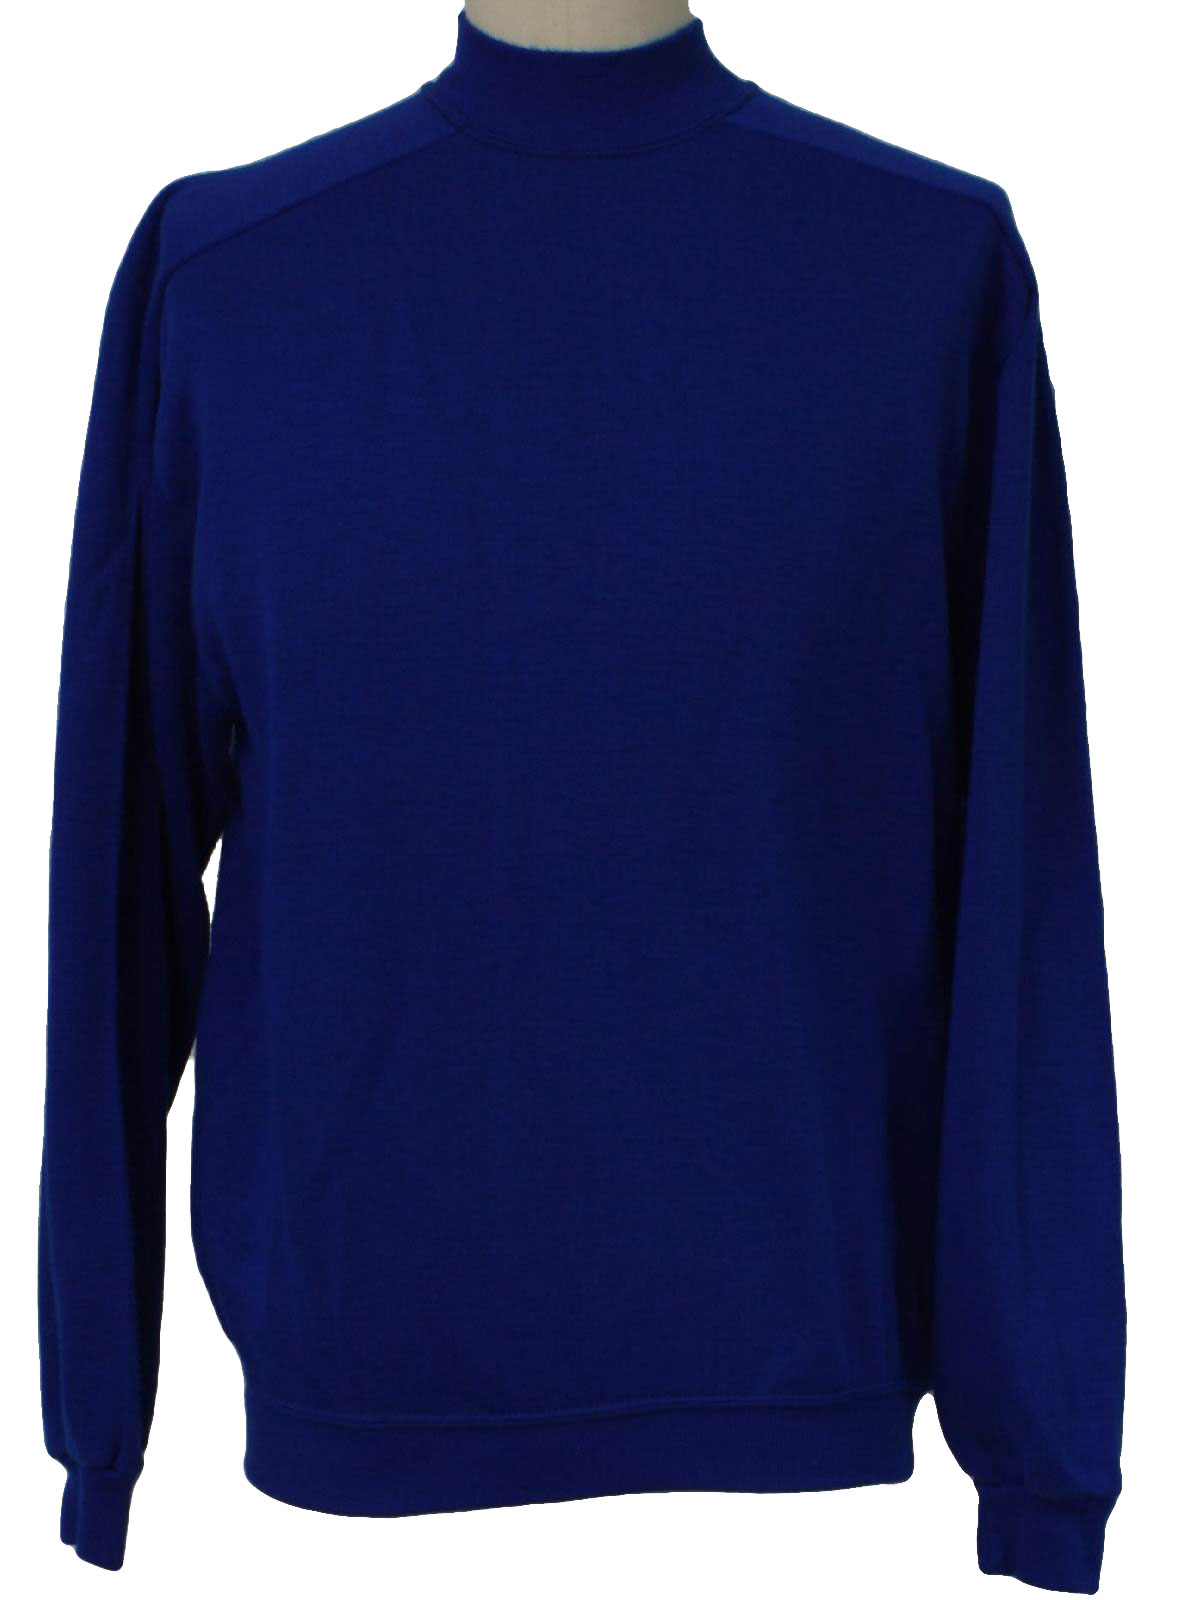 Vintage La Ricco 1960s Knit Shirt: 60s -La Ricco- Mens peacock blue ...